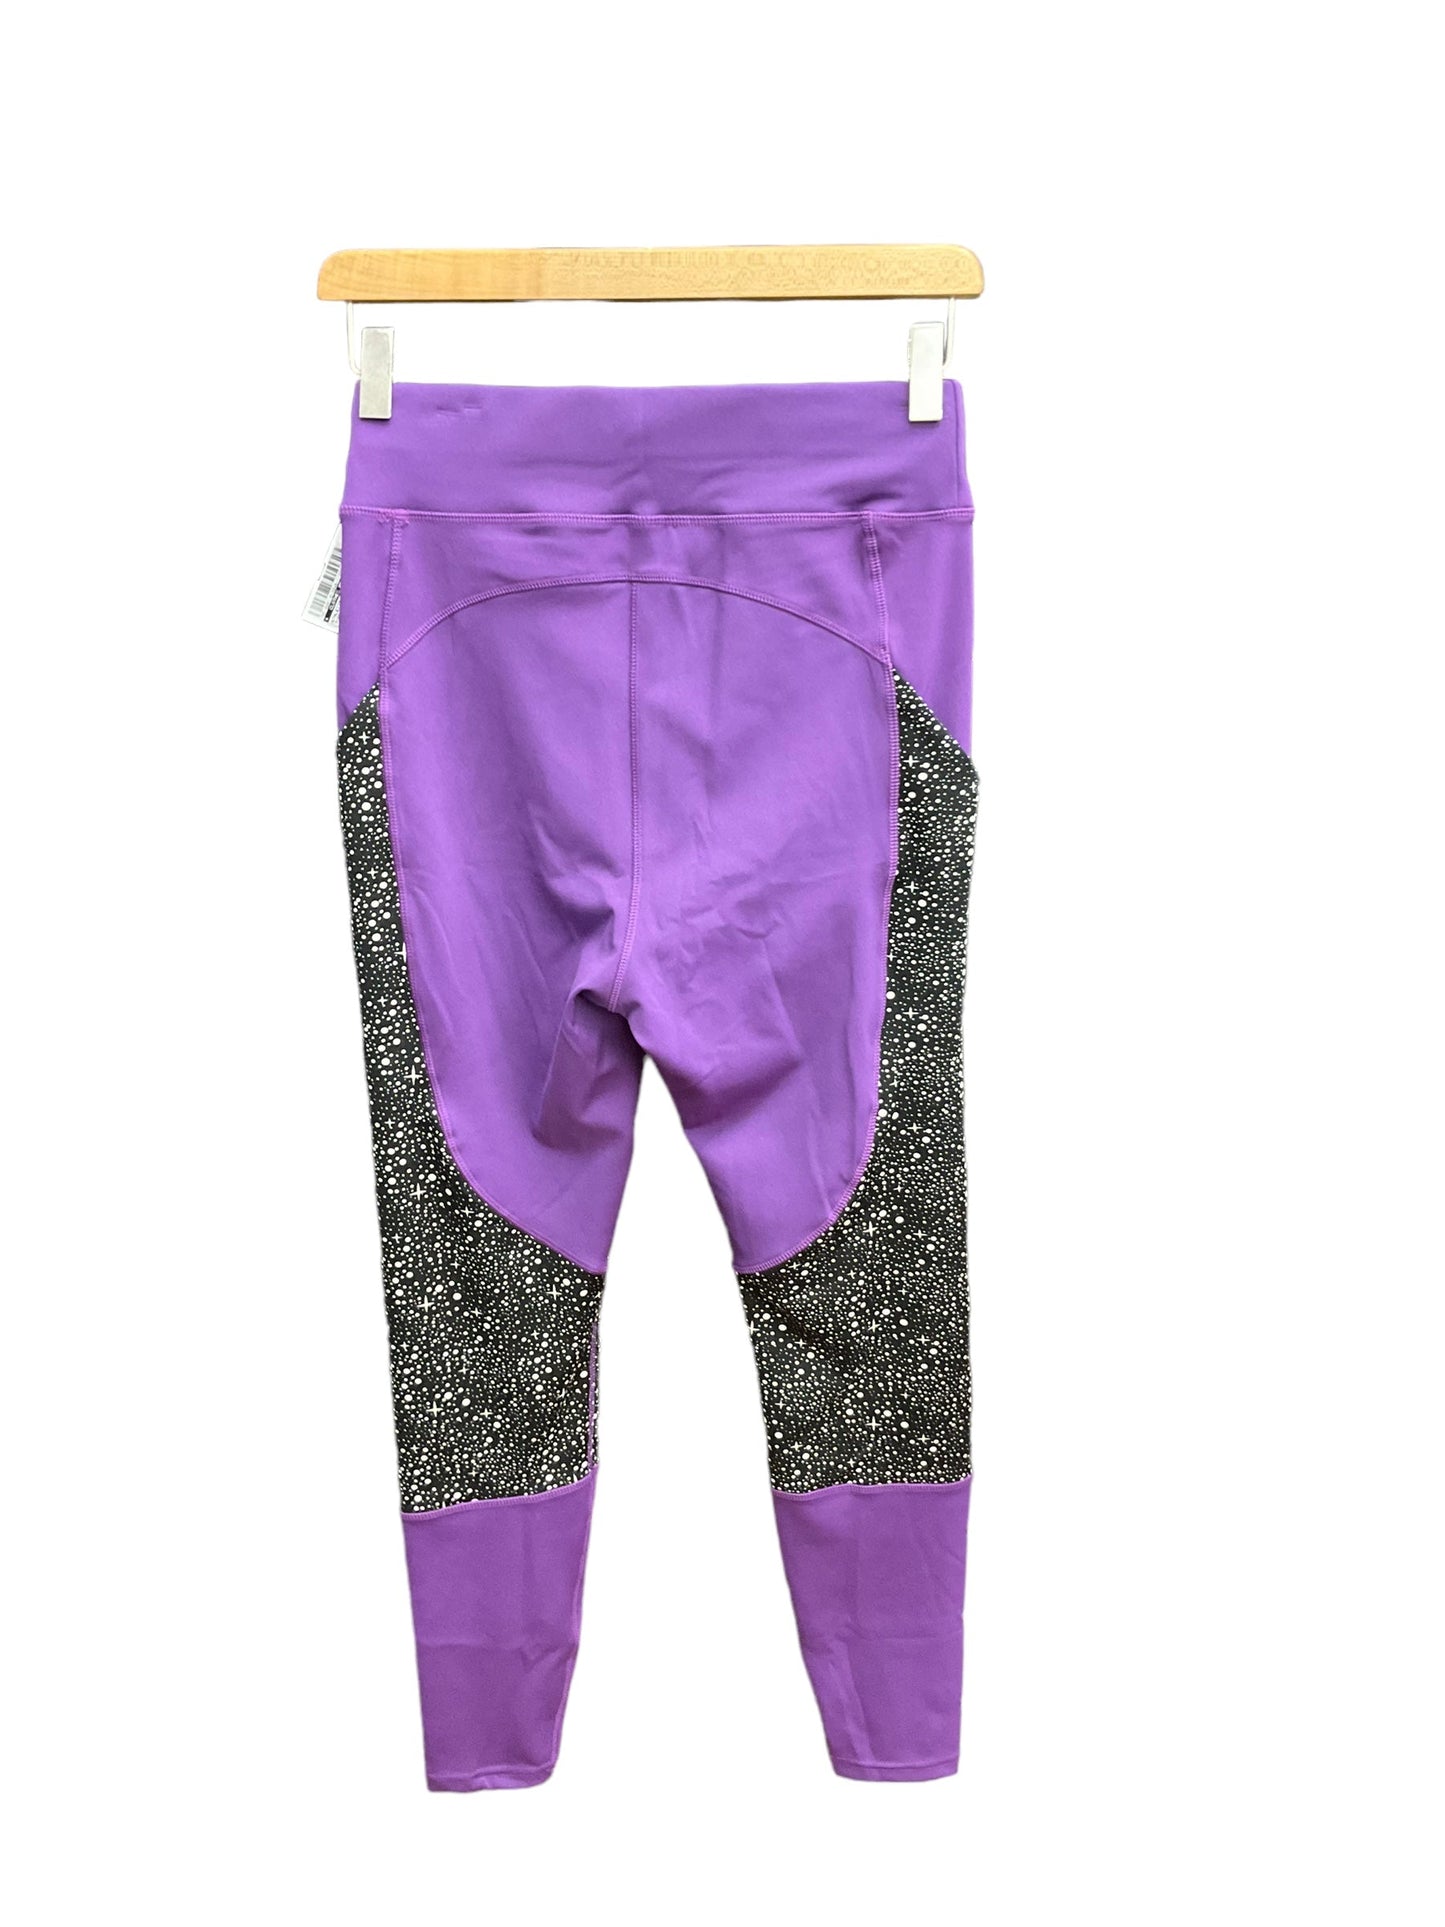 Purple Athletic Leggings Clothes Mentor, Size M